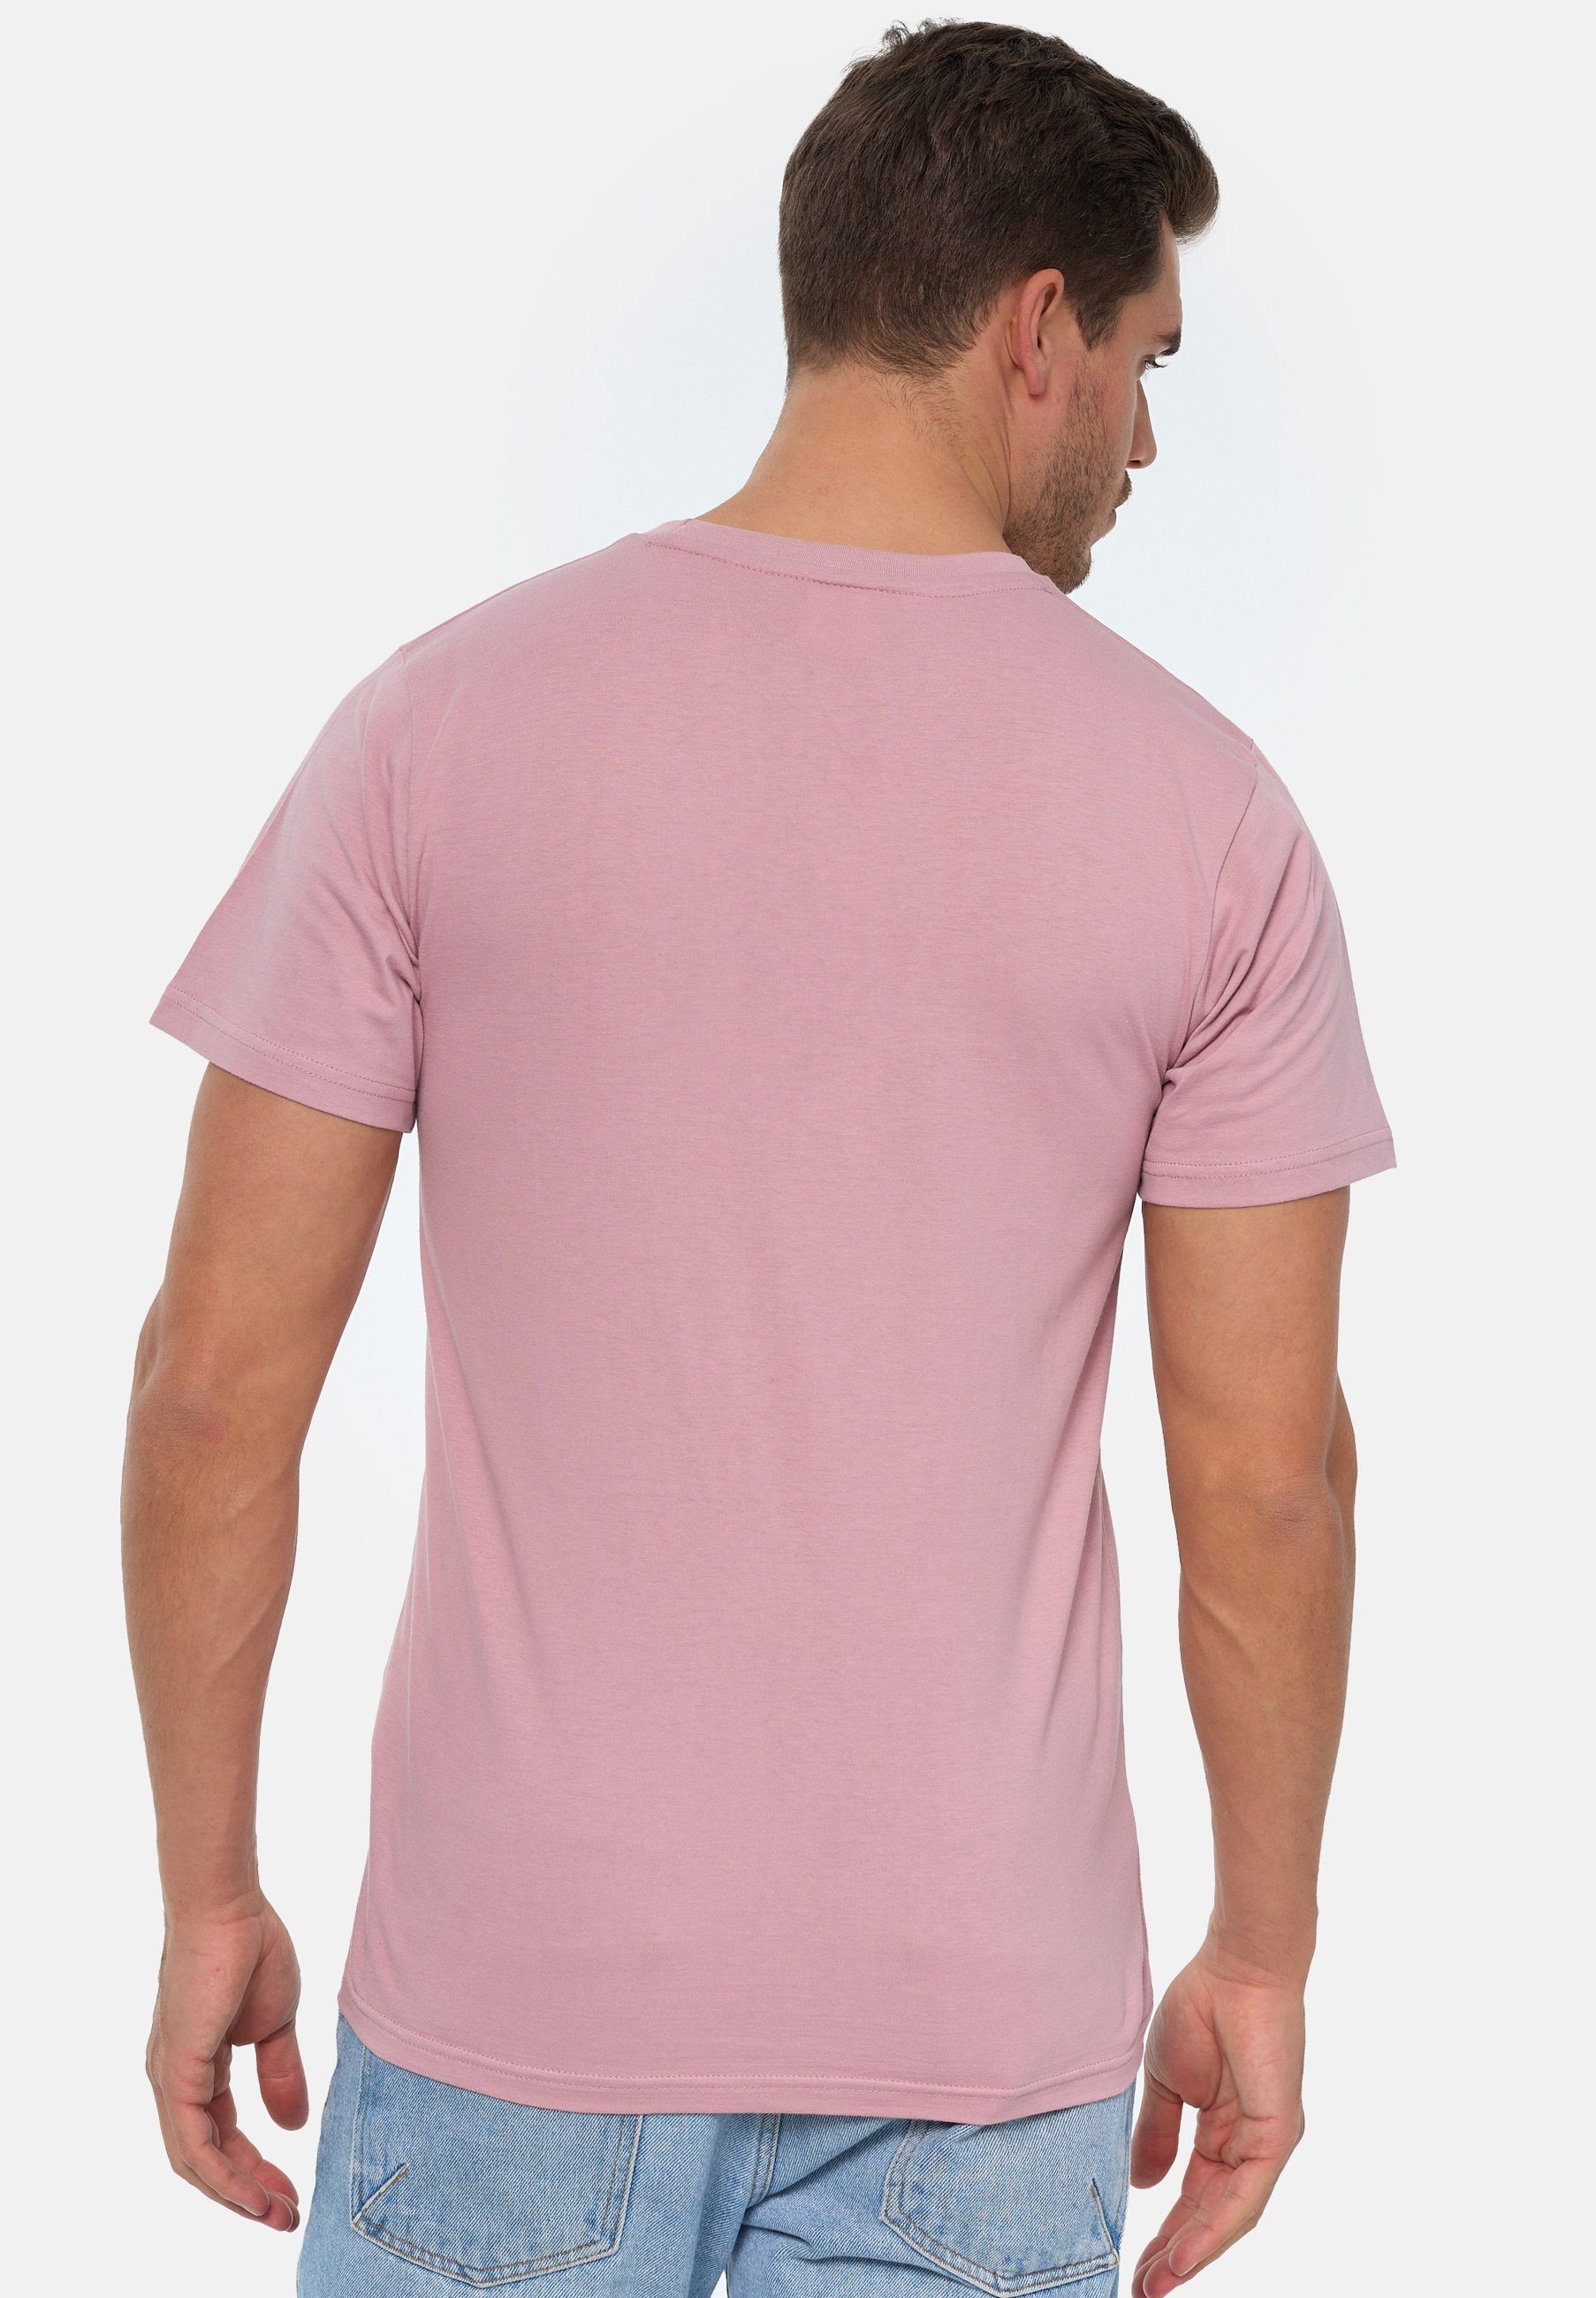 MIKON Bio-Baumwolle Pink T-Shirt zertifizierte Sense GOTS